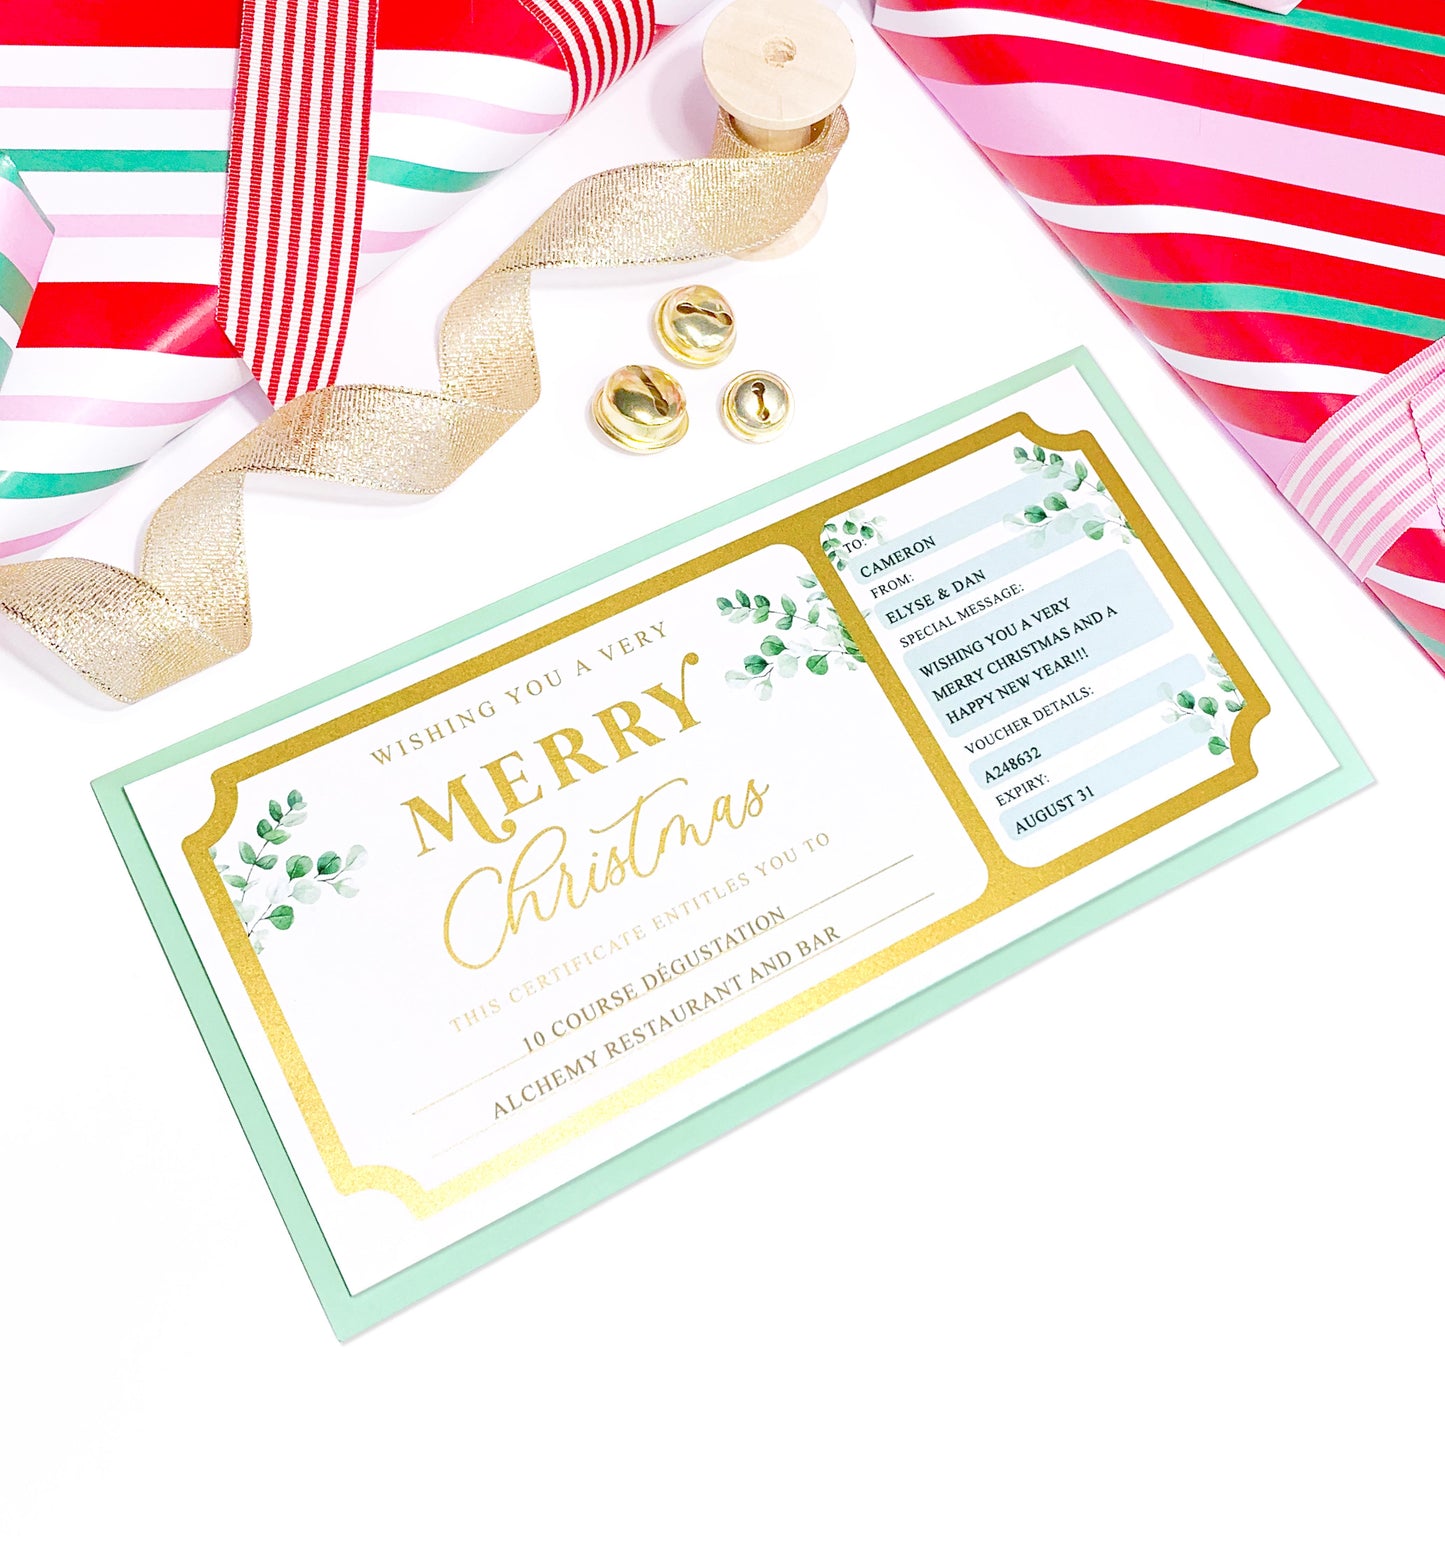 Ferras Greenery Gold | Christmas Gift Voucher